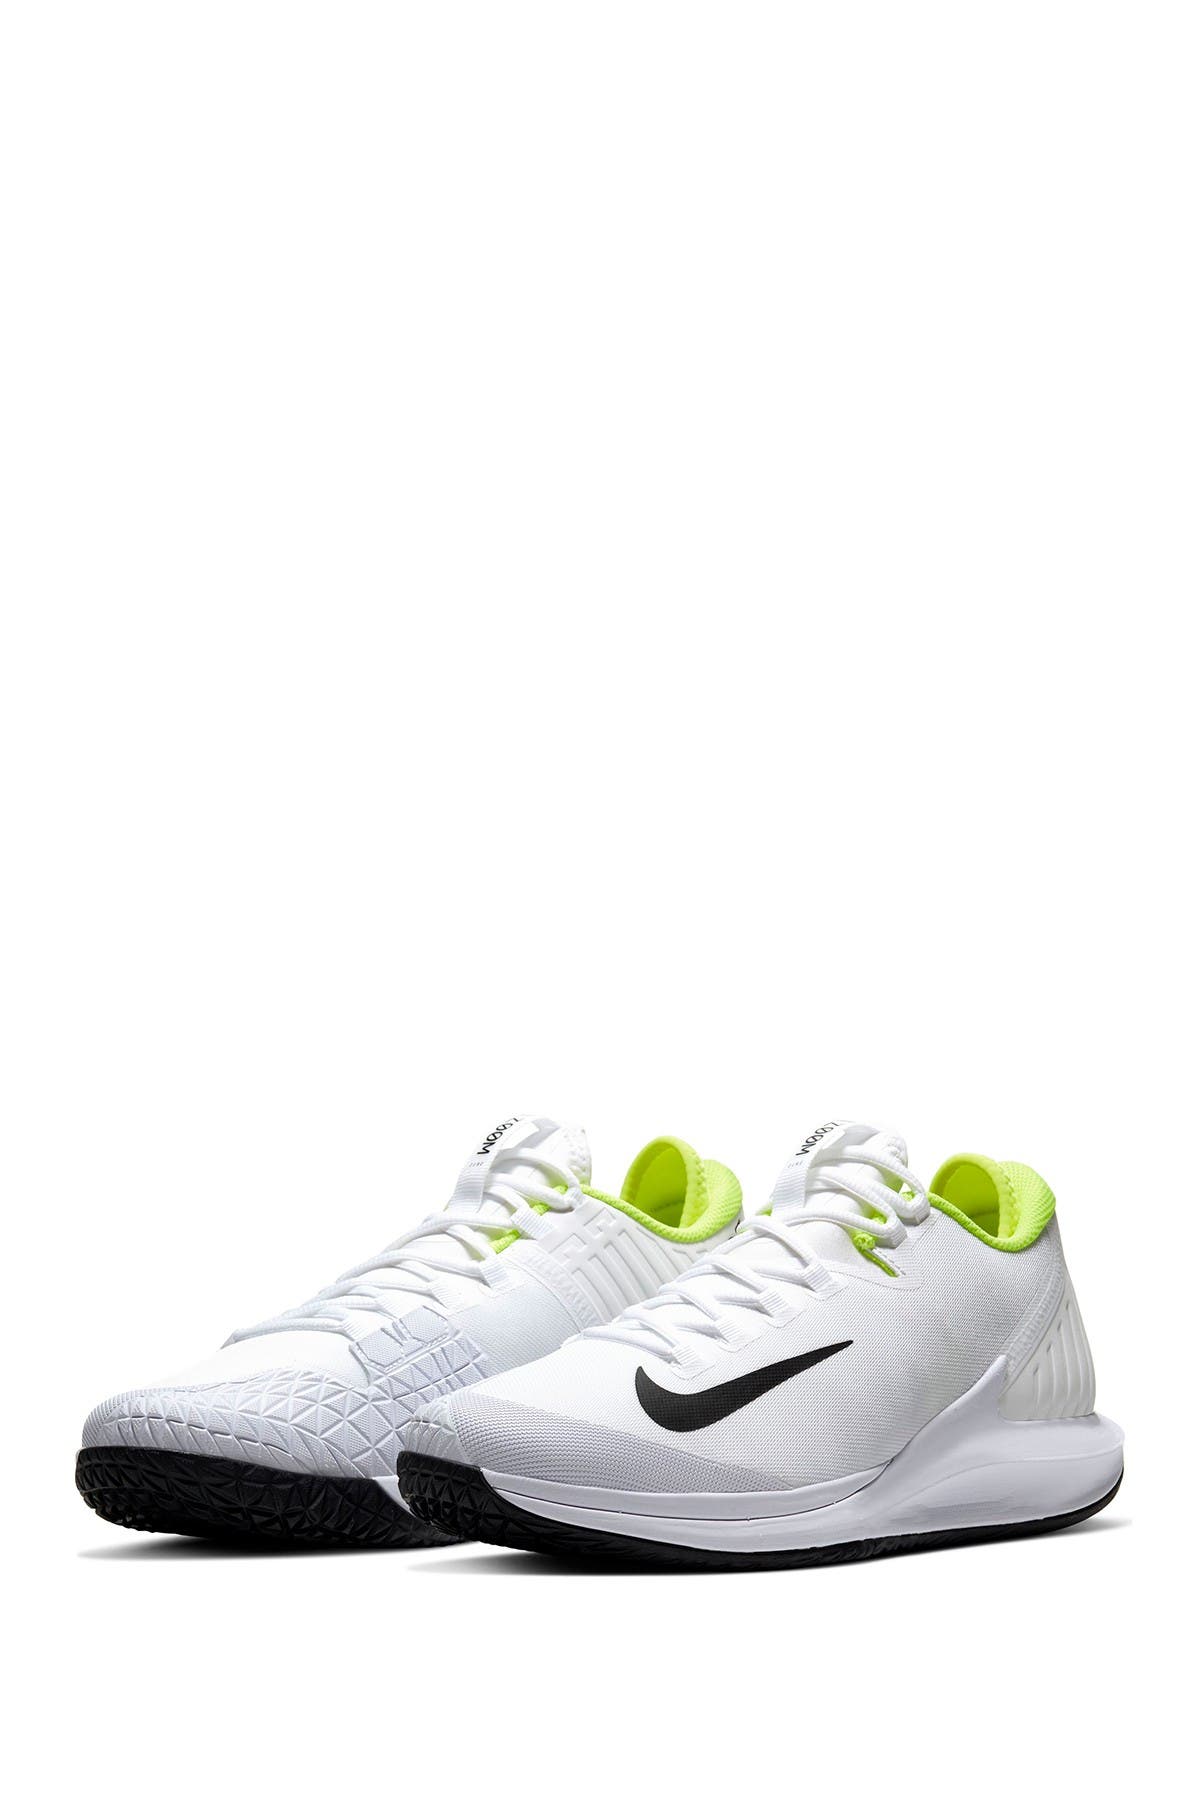 nike court air zoom zero men's tennis shoe